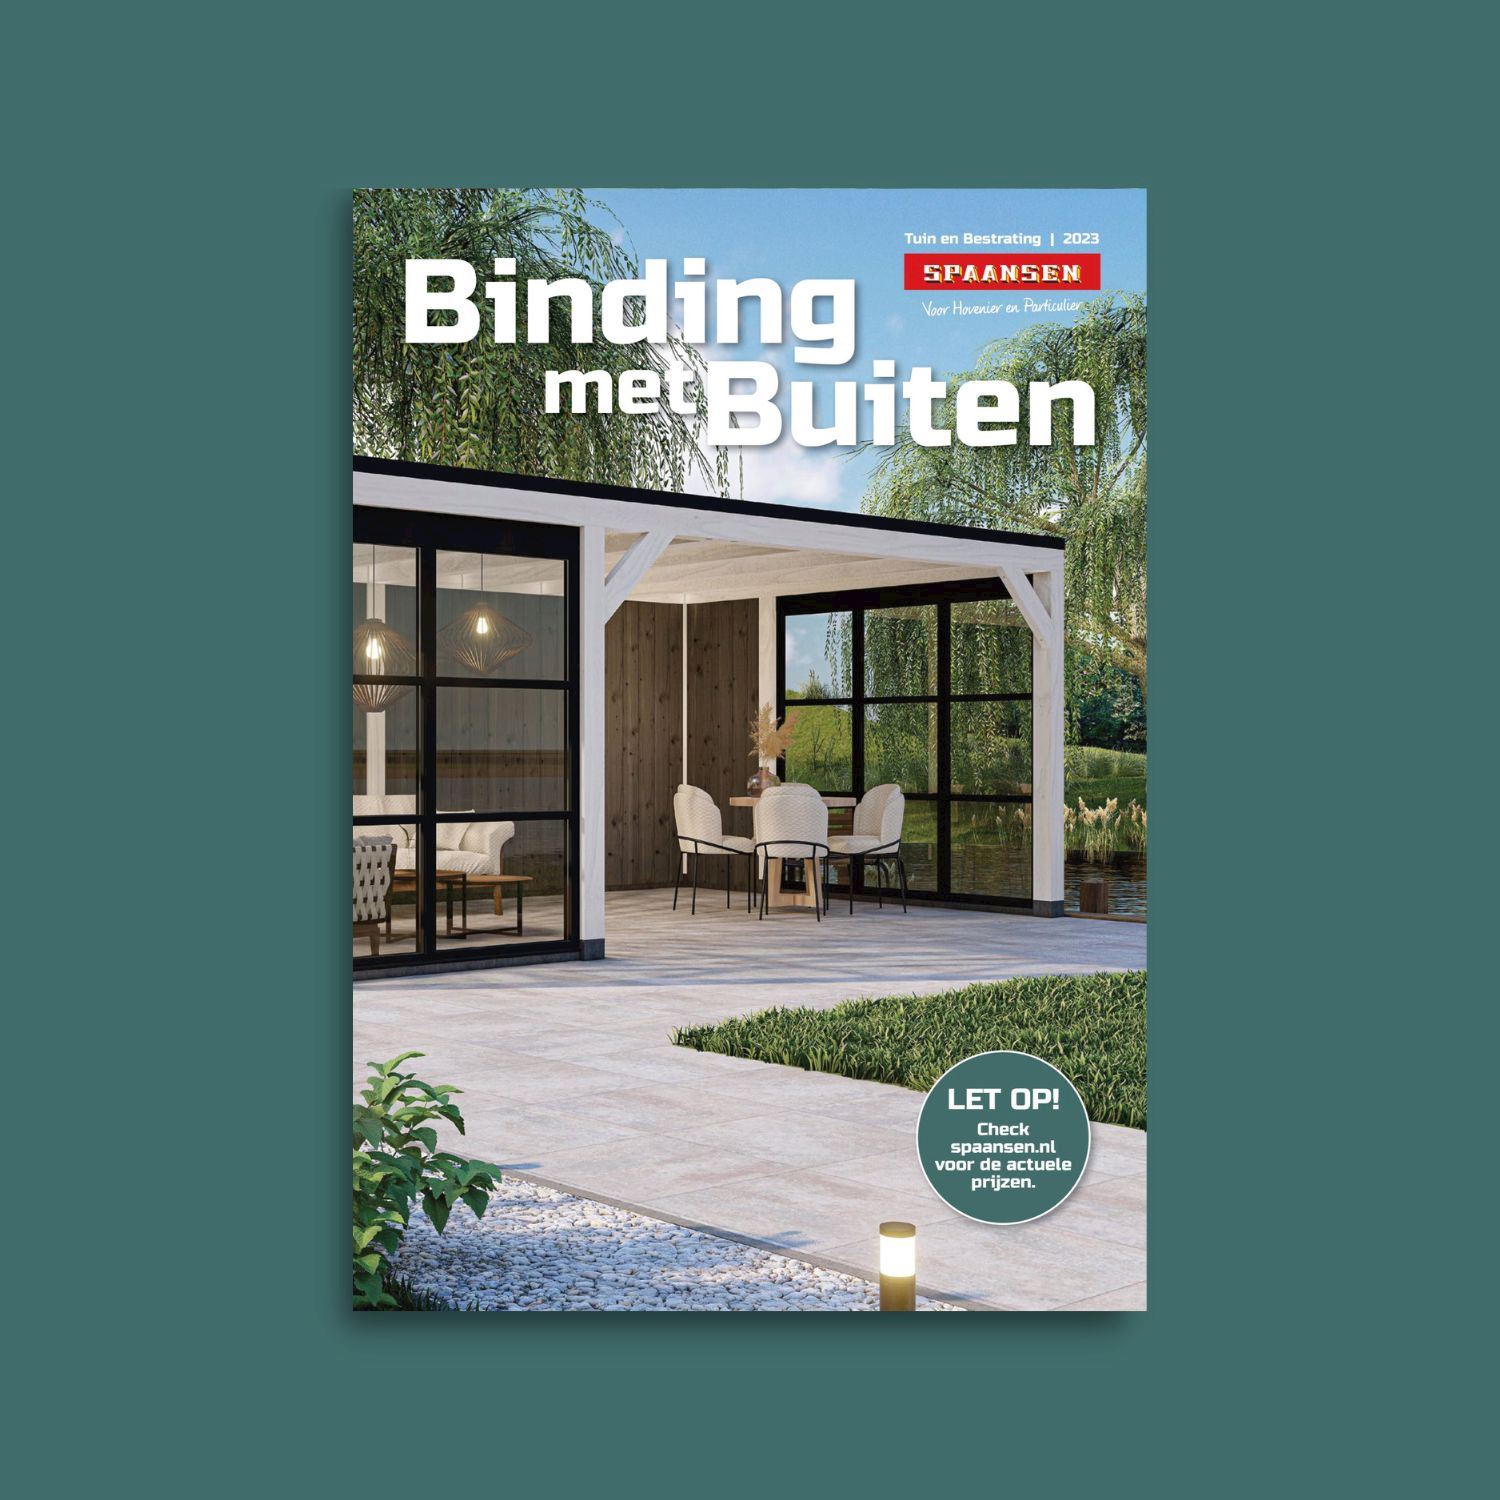 spaansen-tuin-en-bestrating-catalogus-2023